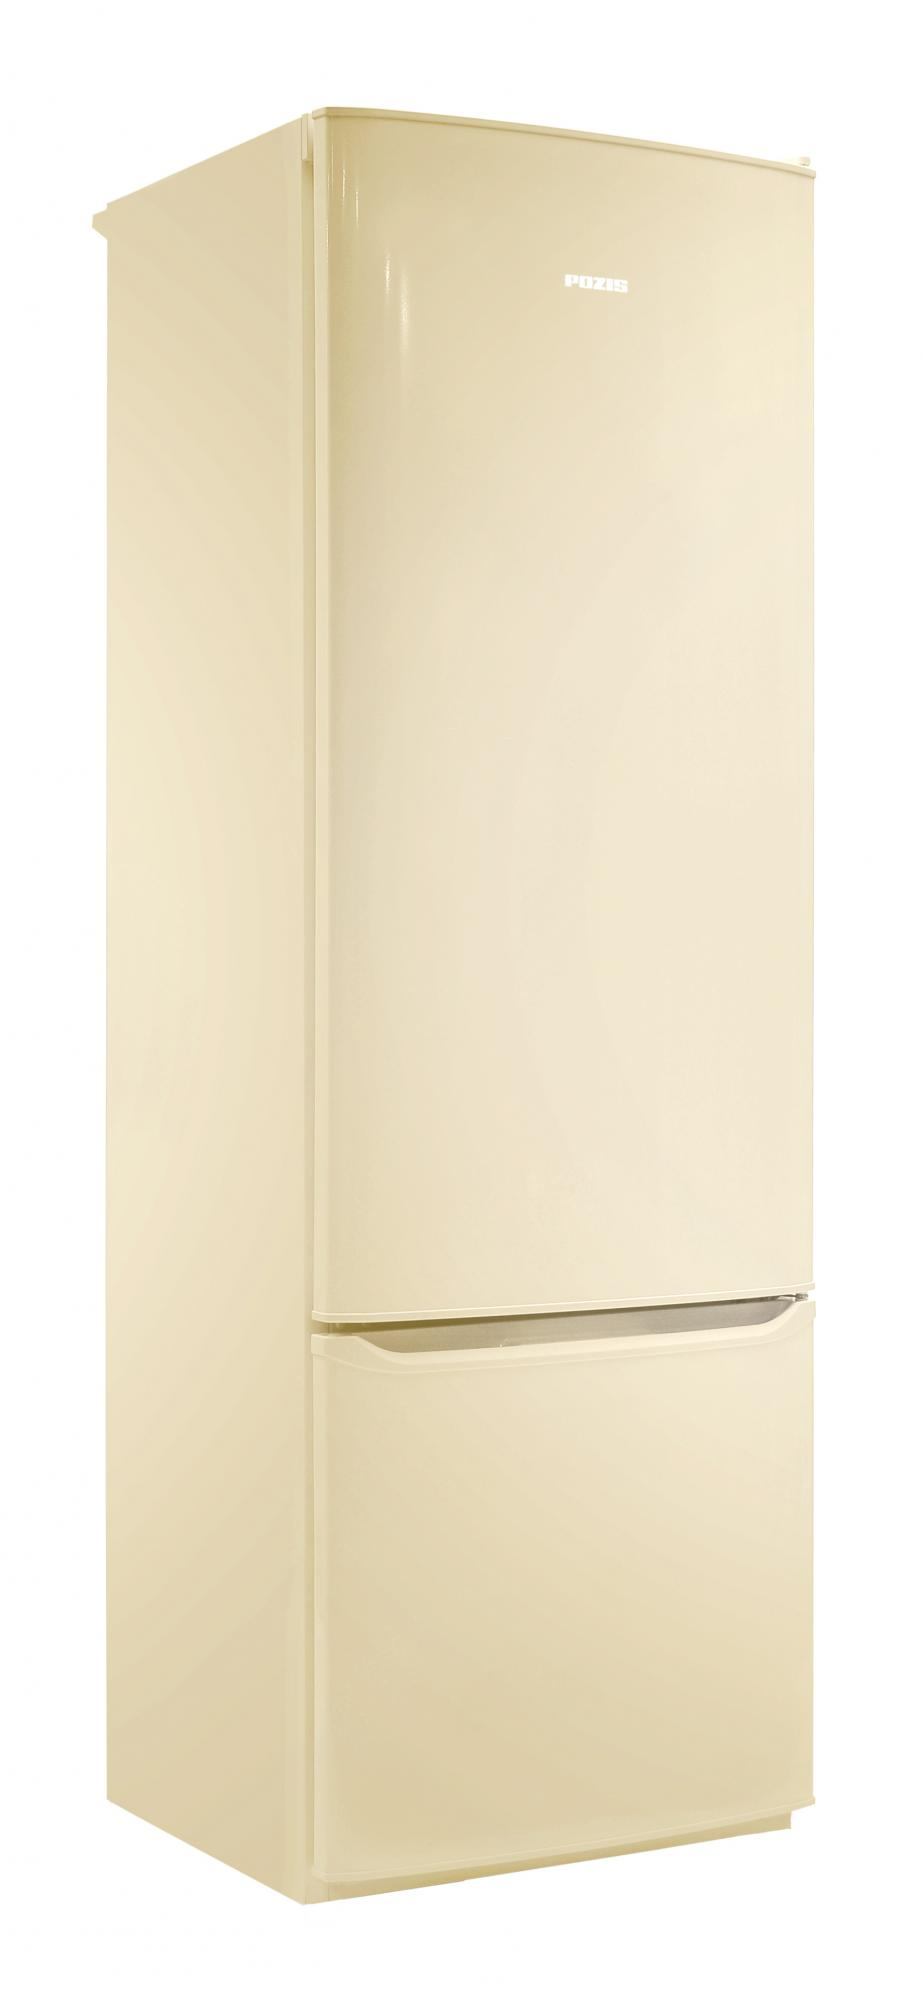 Холодильник POZIS RK-103, бежевый глянцевый